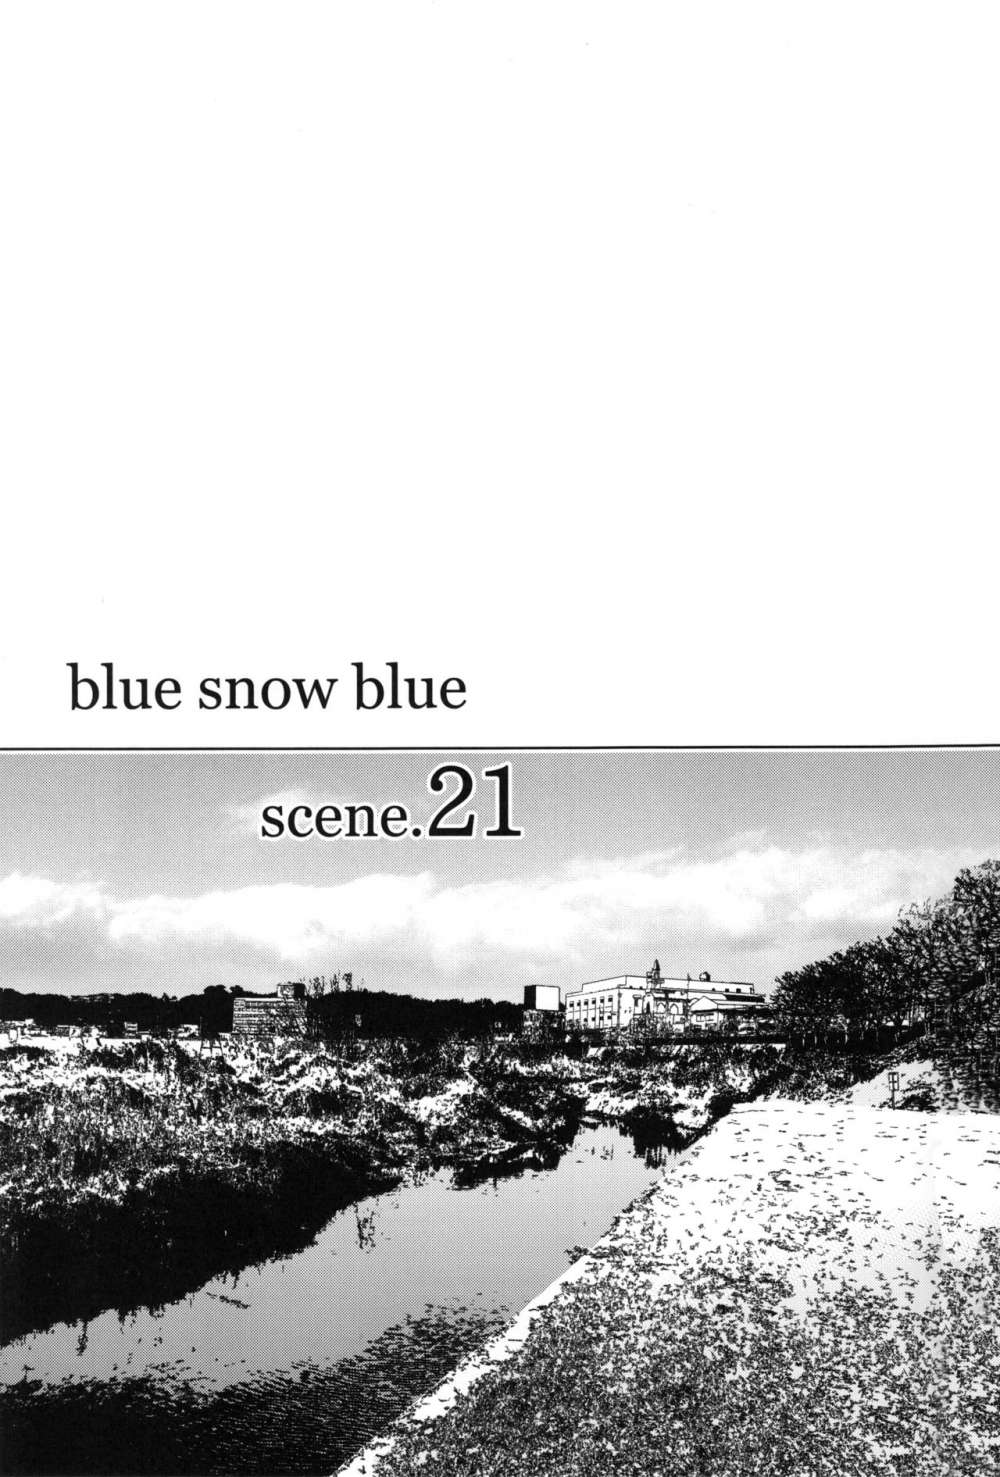 blue snow blue scene.21 0